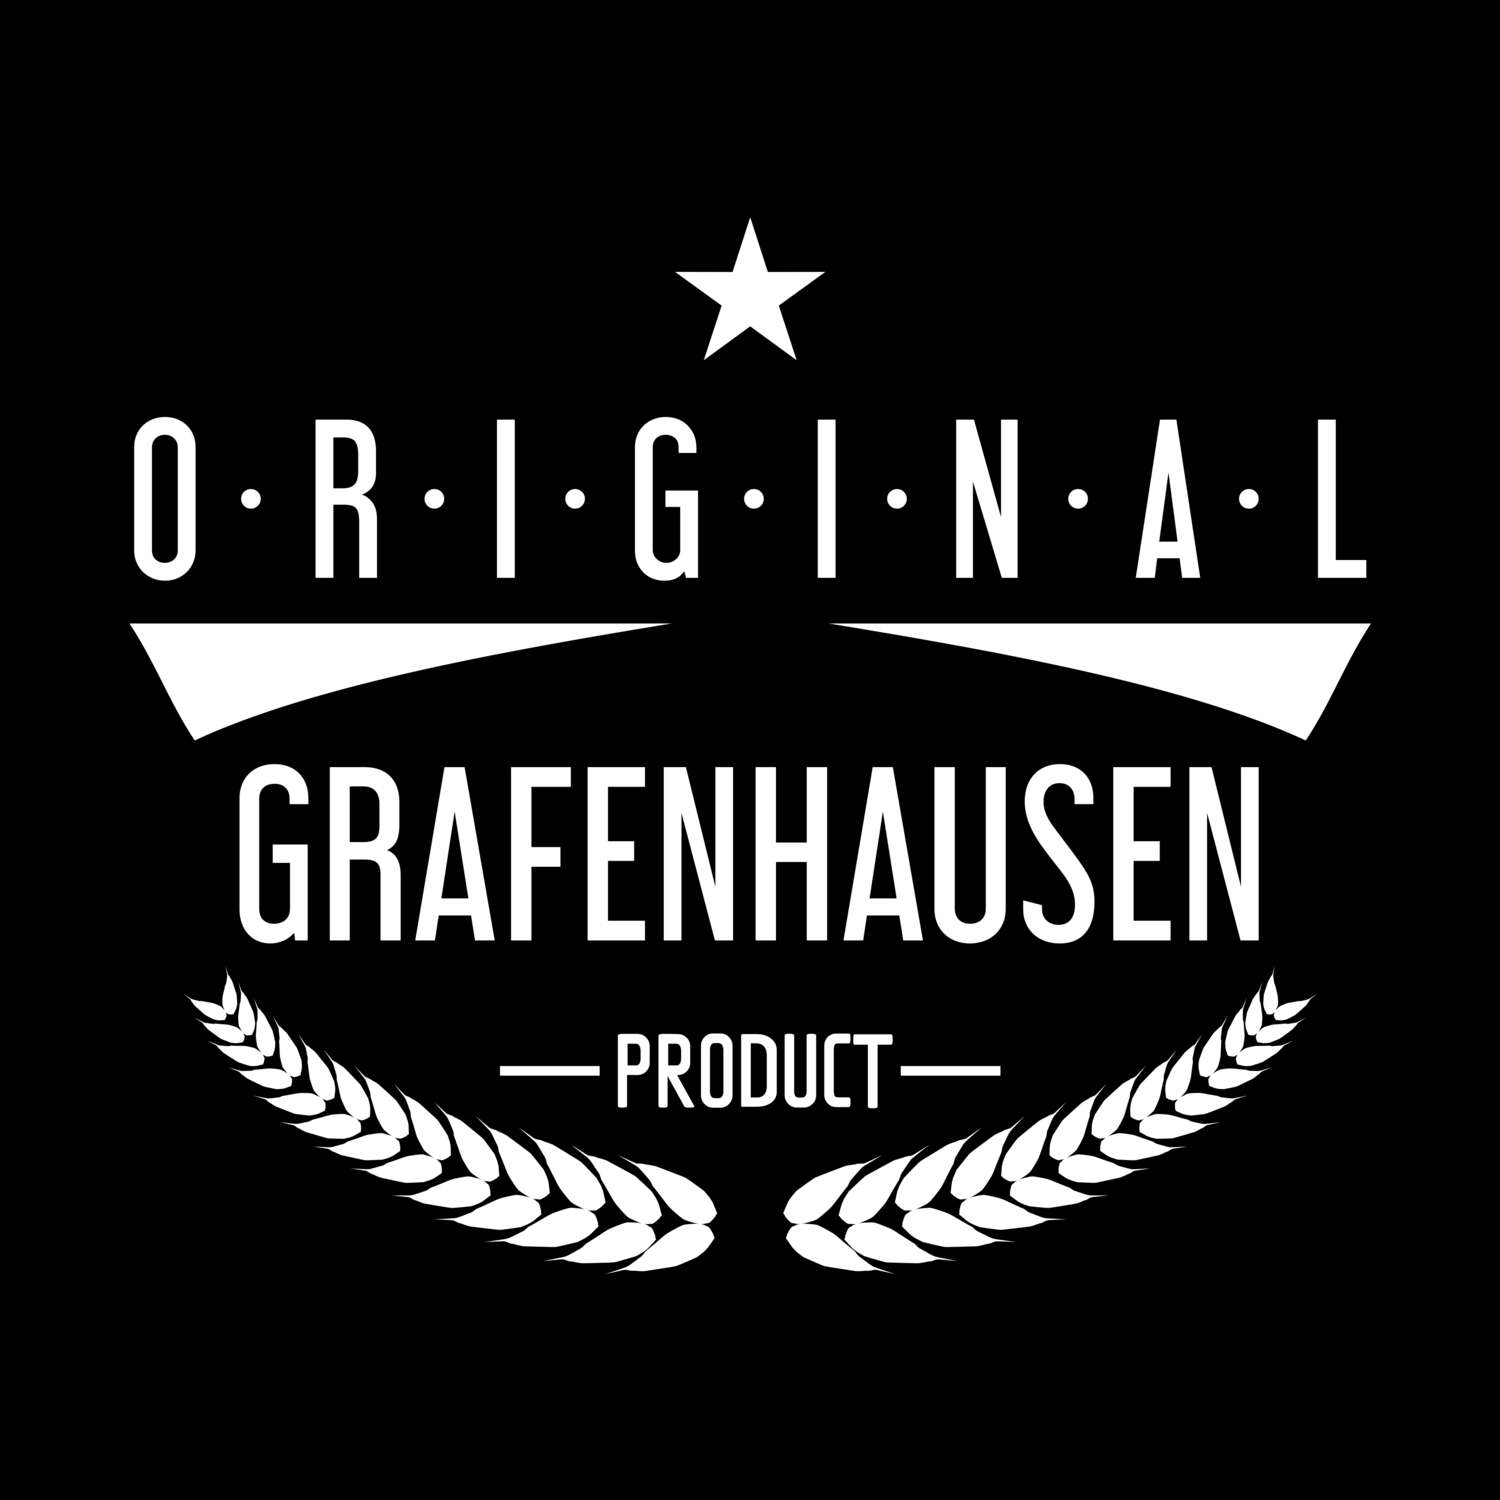 Grafenhausen T-Shirt »Original Product«